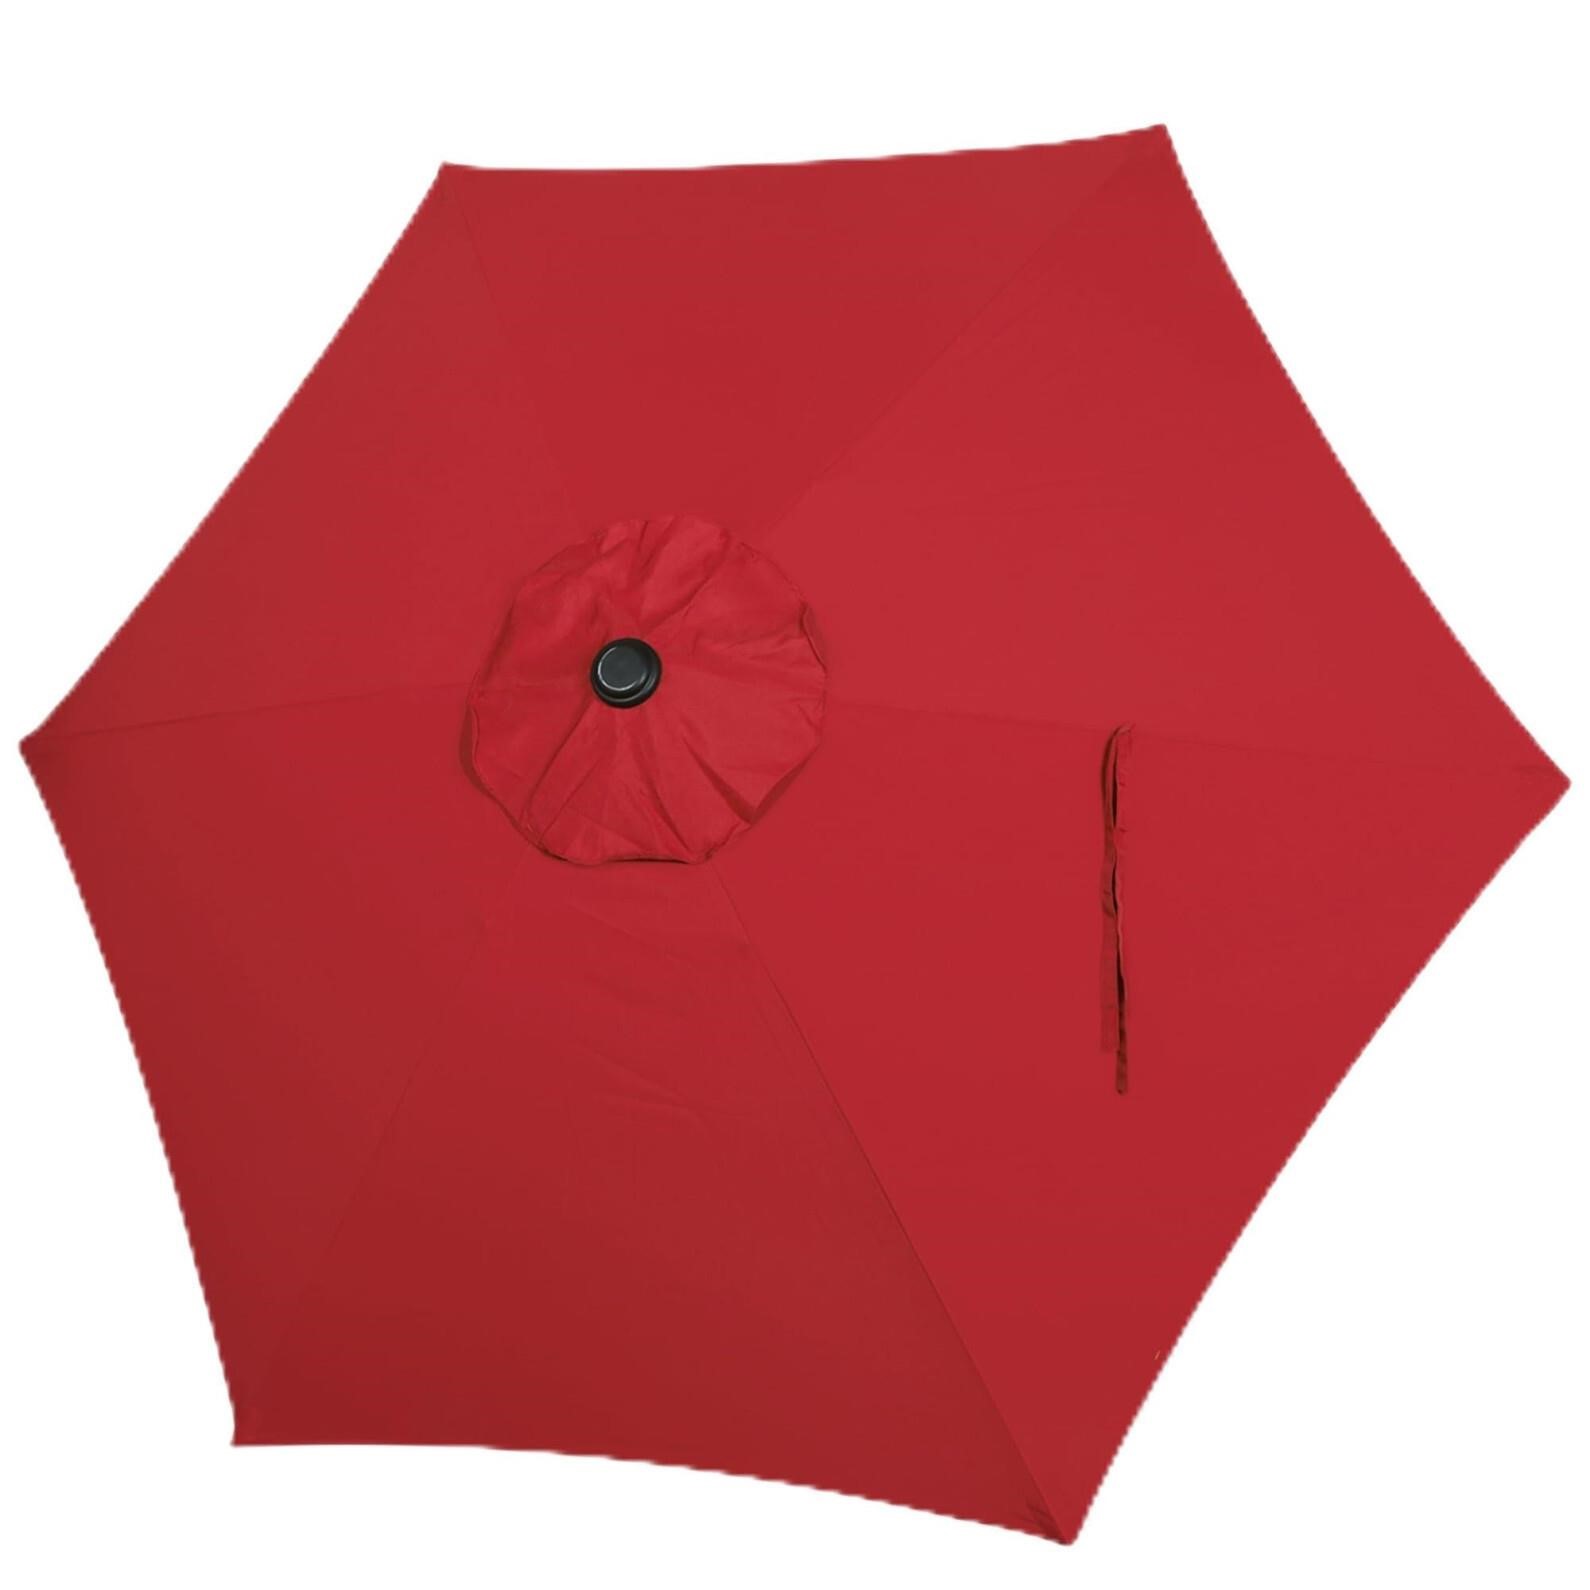 Blissun 7.5ft Patio Umbrella Replacement Canopy, M